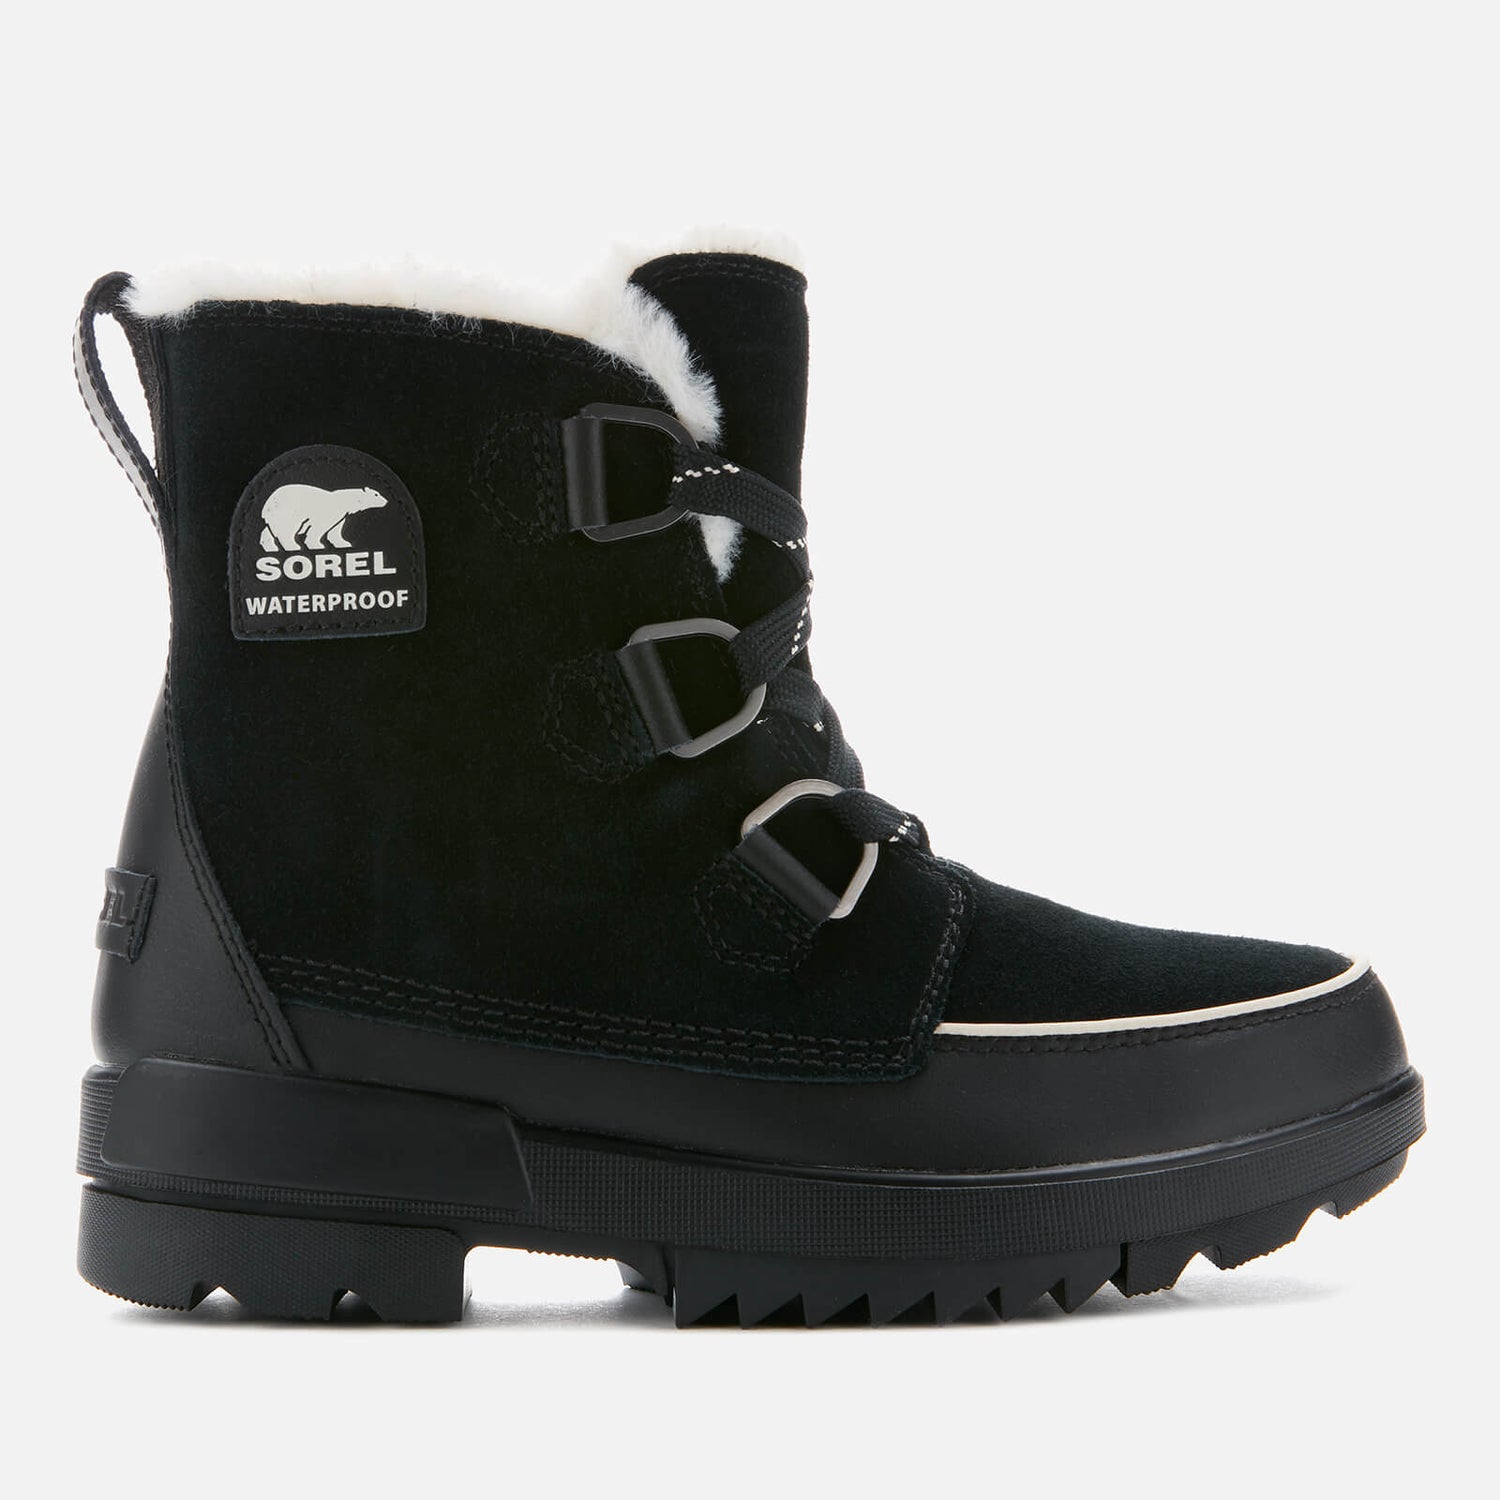 Sorel Women's Torino Waterproof Suede Hiking Style Boots - Black - UK 3